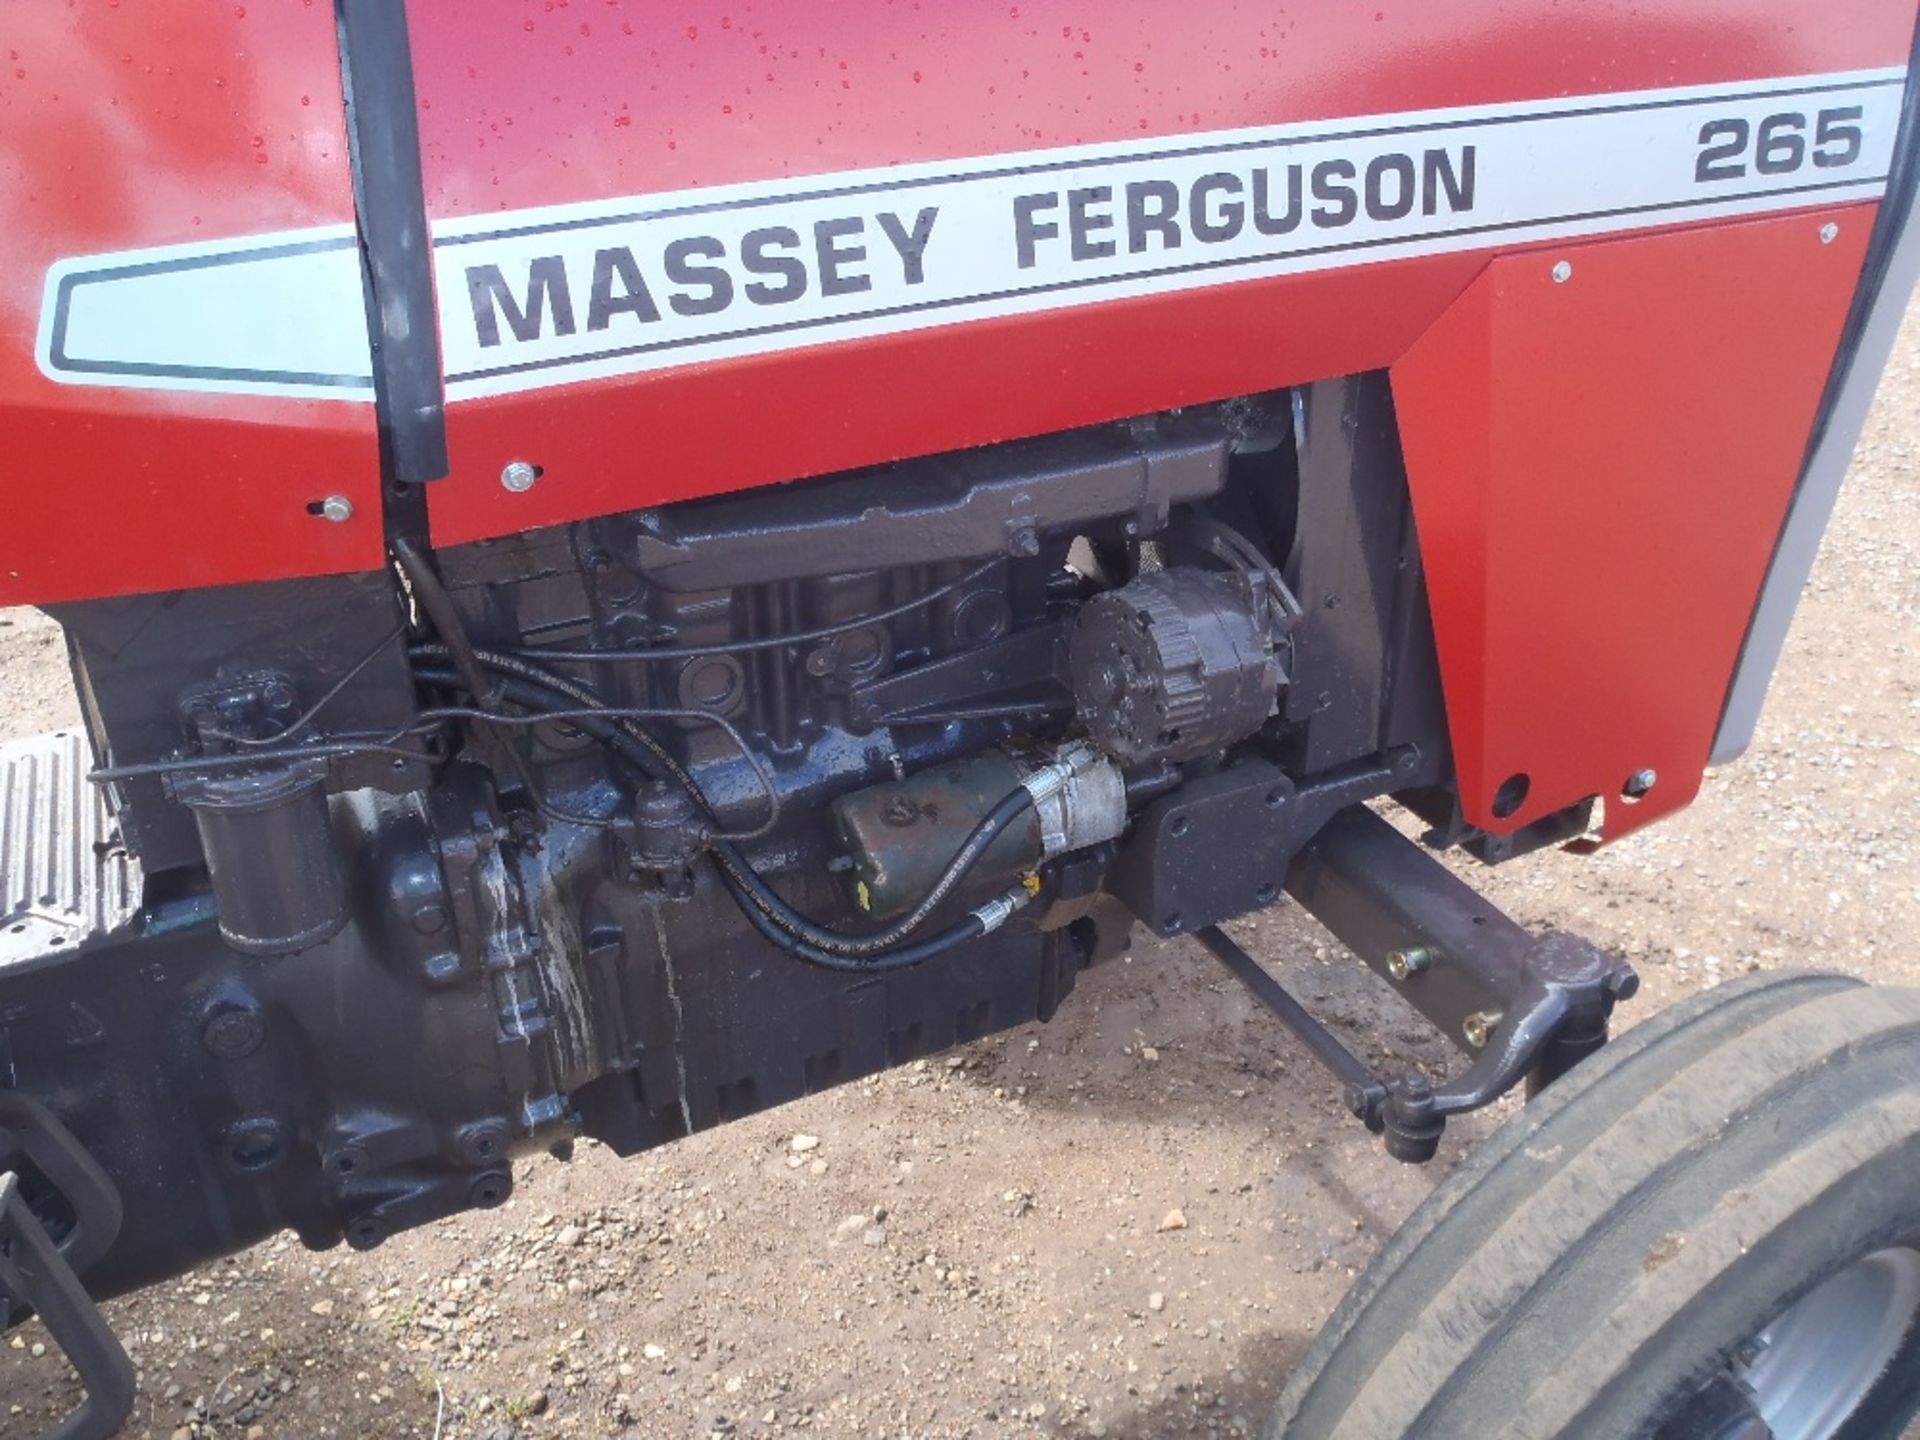 Massey Ferguson 265 Tractor - Image 7 of 9